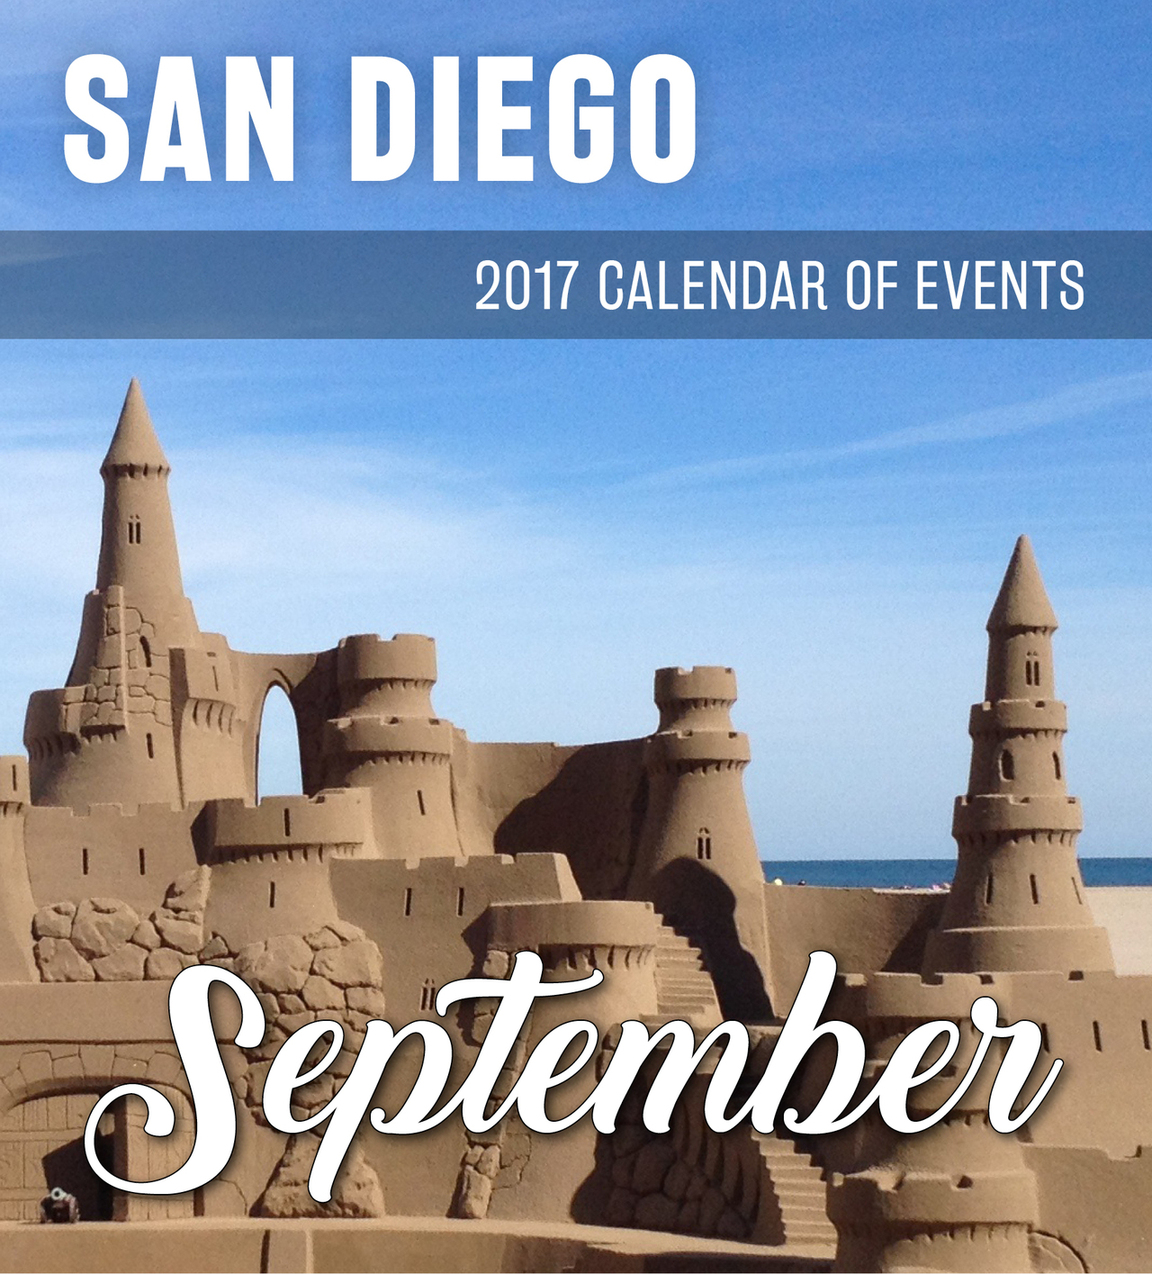 September 2017 Calendar of Events for San Diego